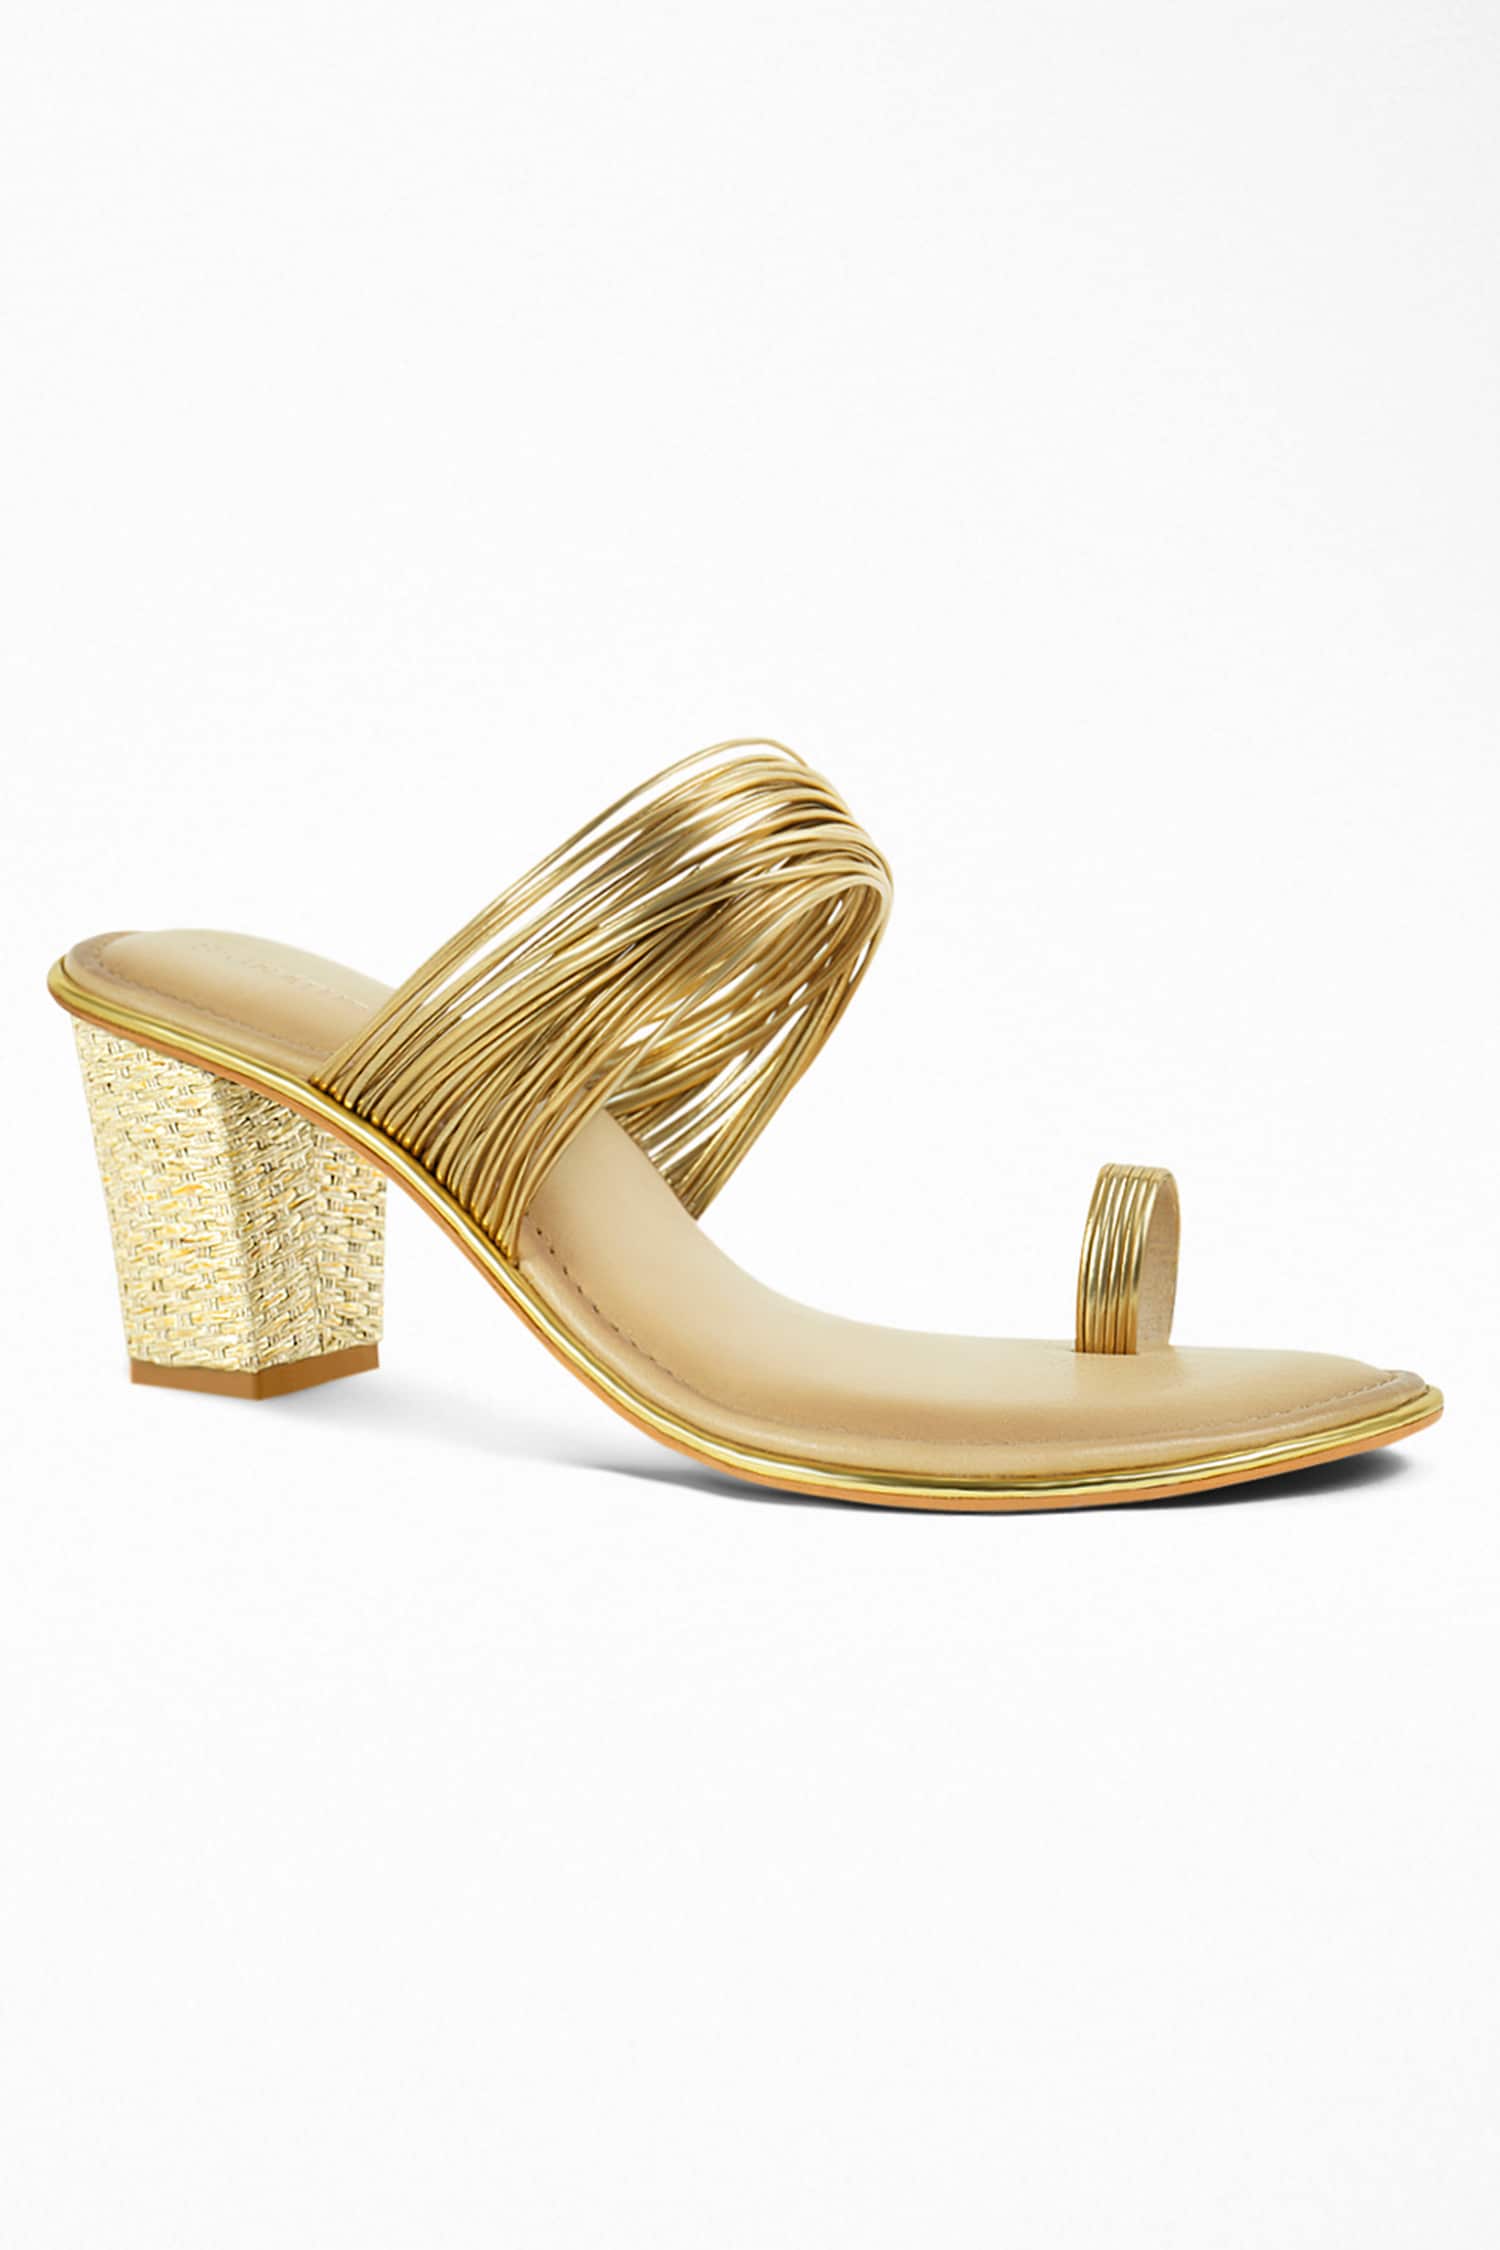 Buy Insaddlers Caual Blocke Heeled Sandals Rose Gold Online